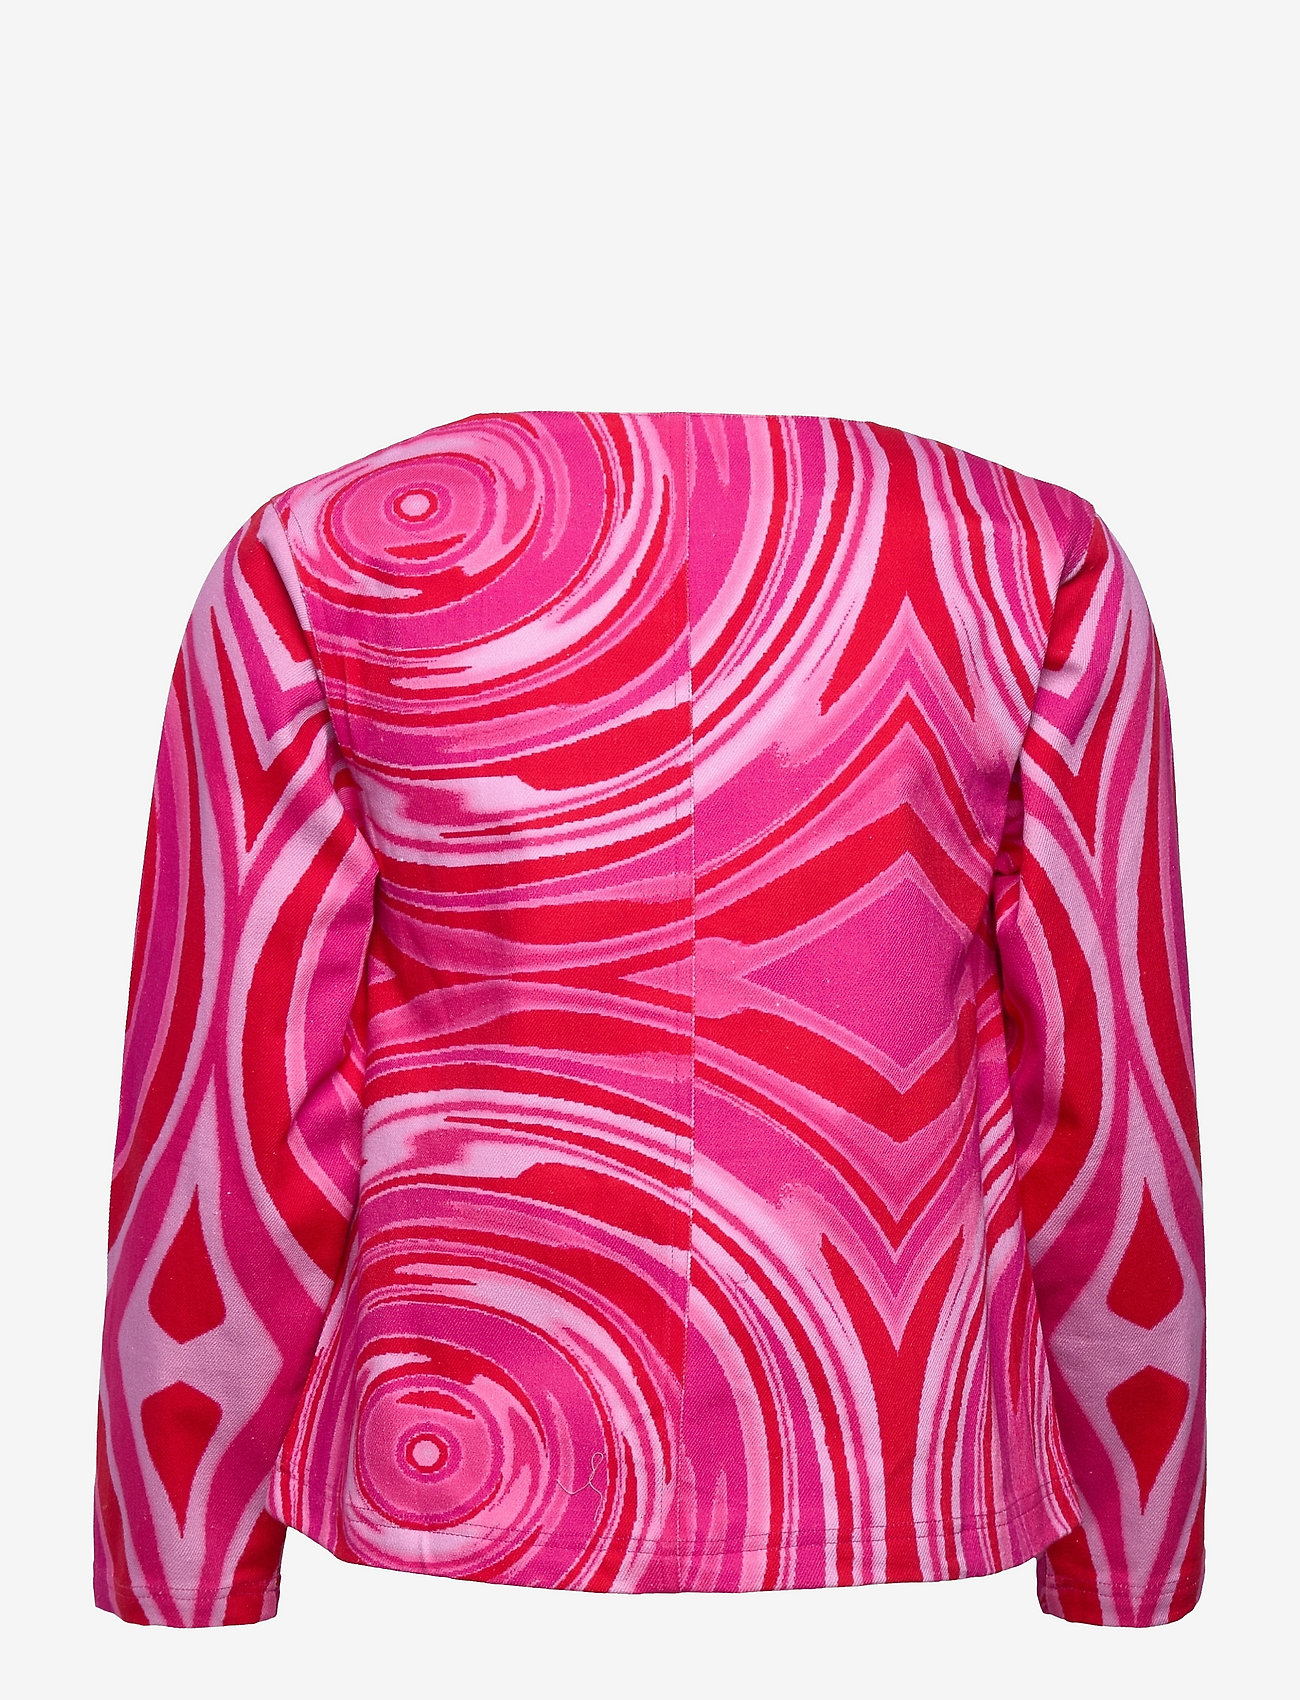 Hosbjerg - Frama Shirt - women - swirl pink - 1